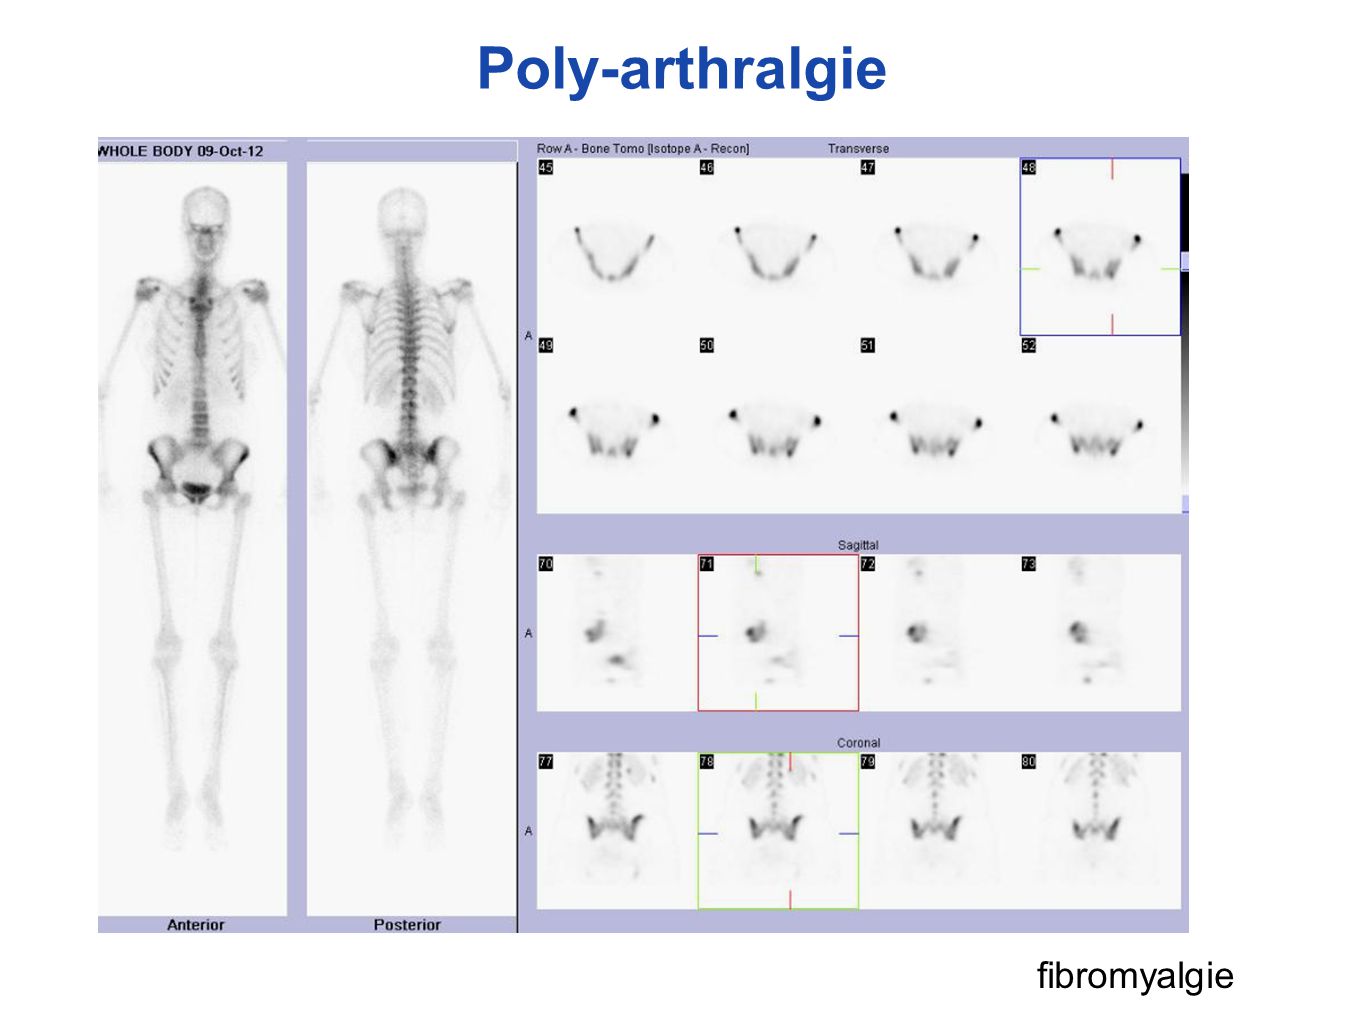 Poly-arthralgie fibromyalgie